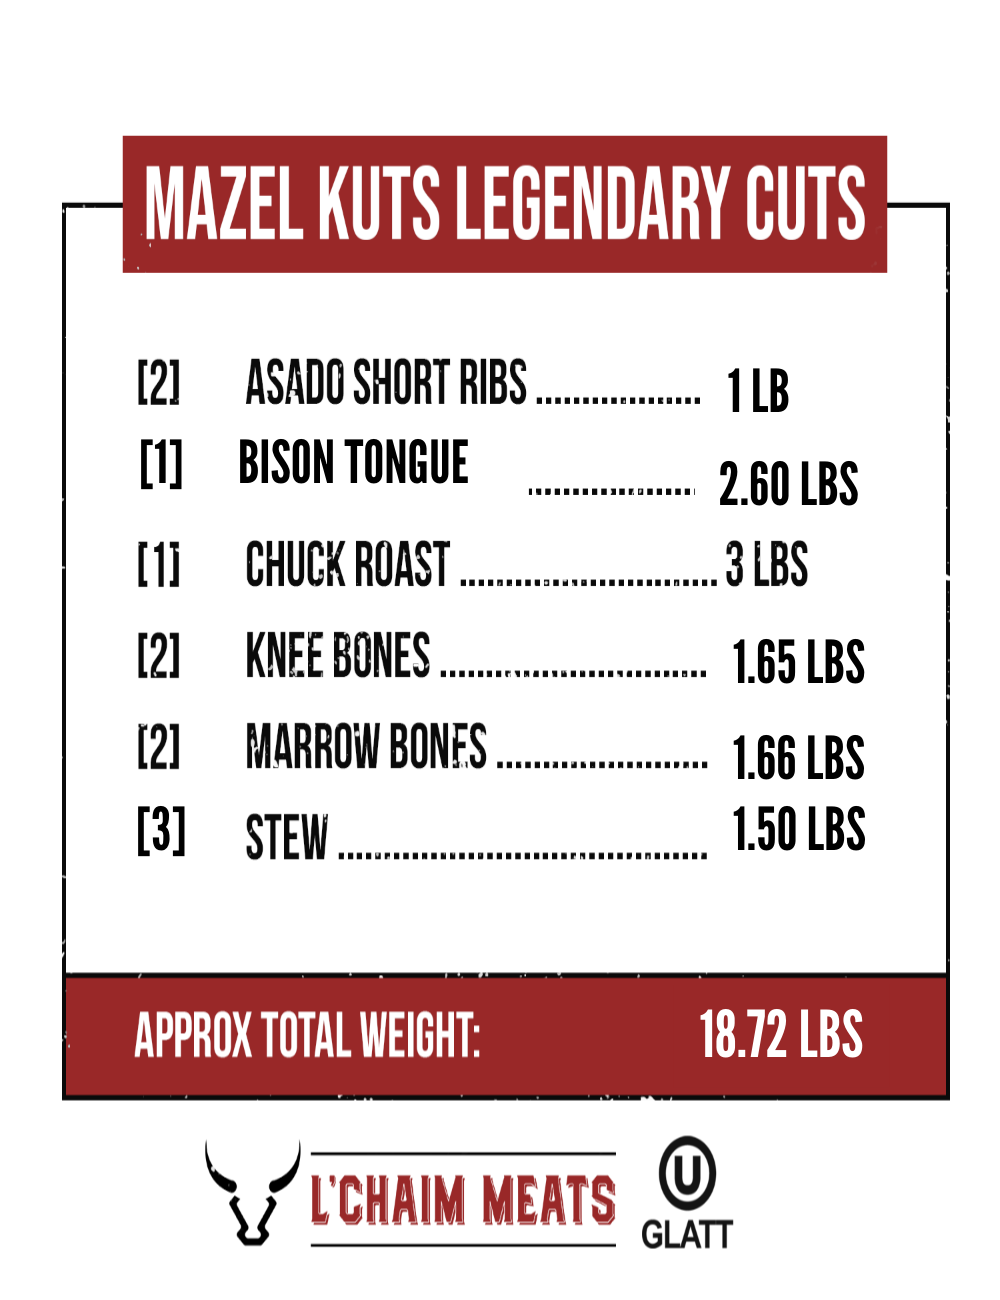 American Bison Mazel Kuts Legendary Box